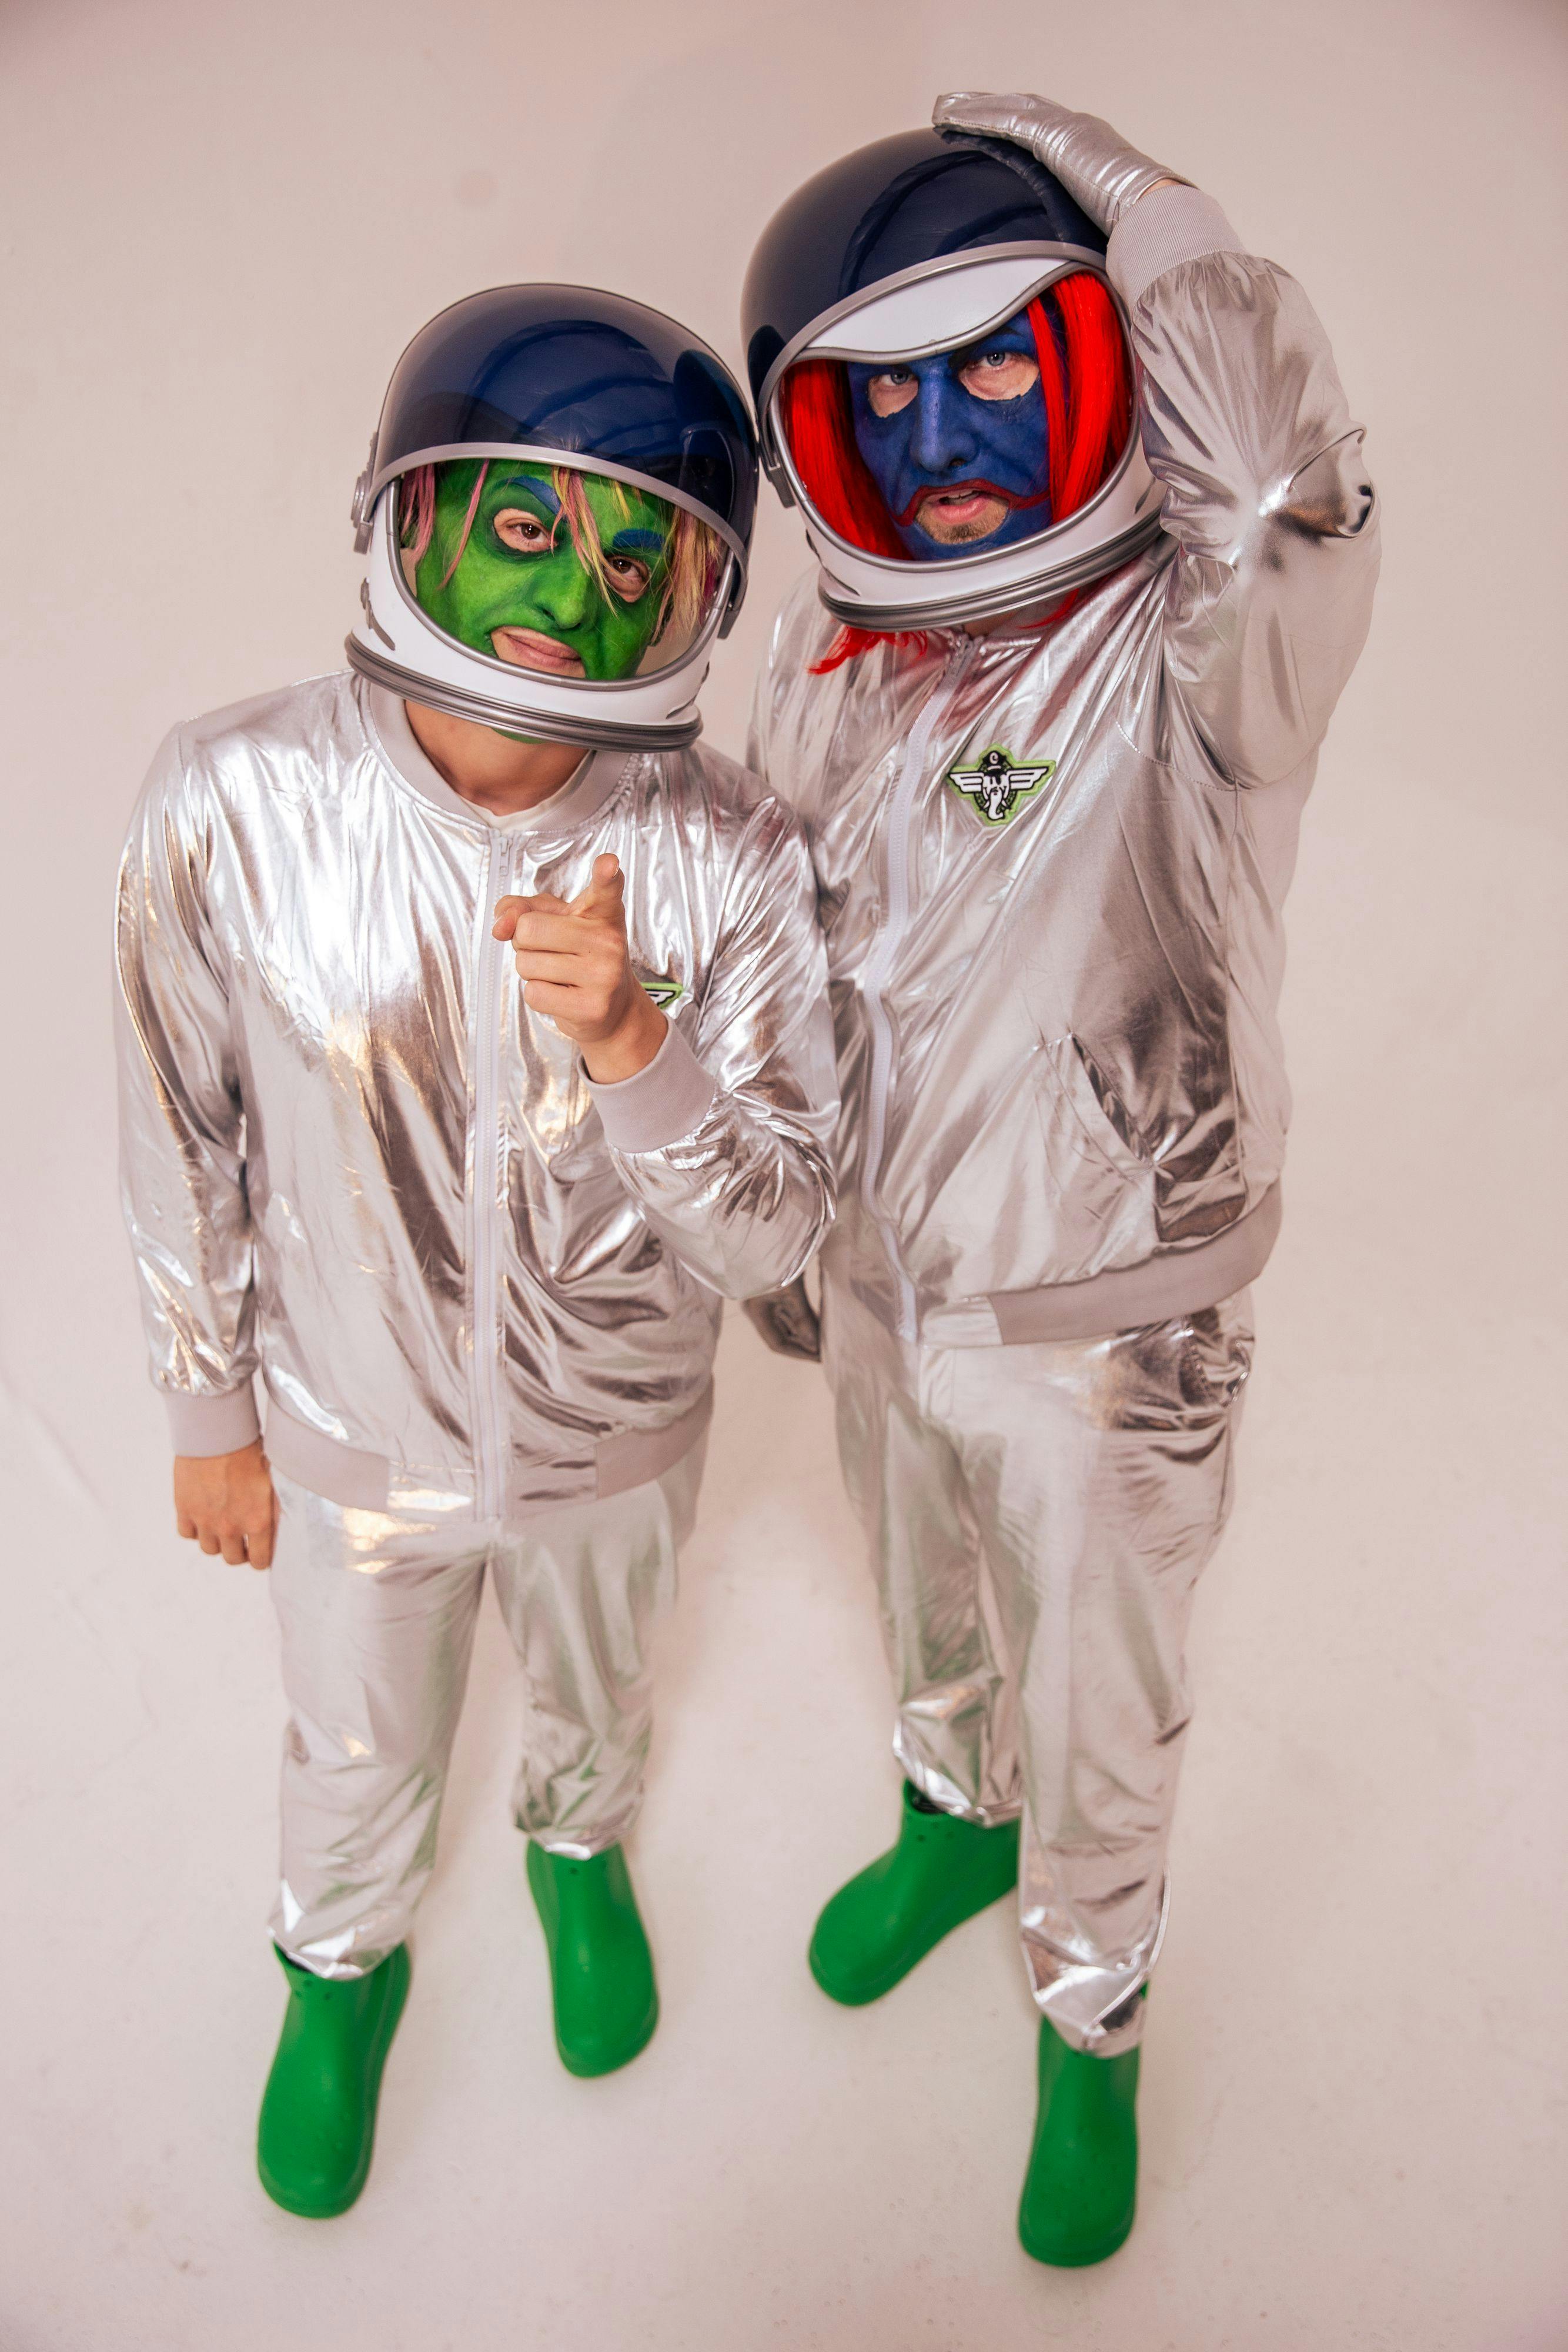 Duo Confetti posing in astronaut suits